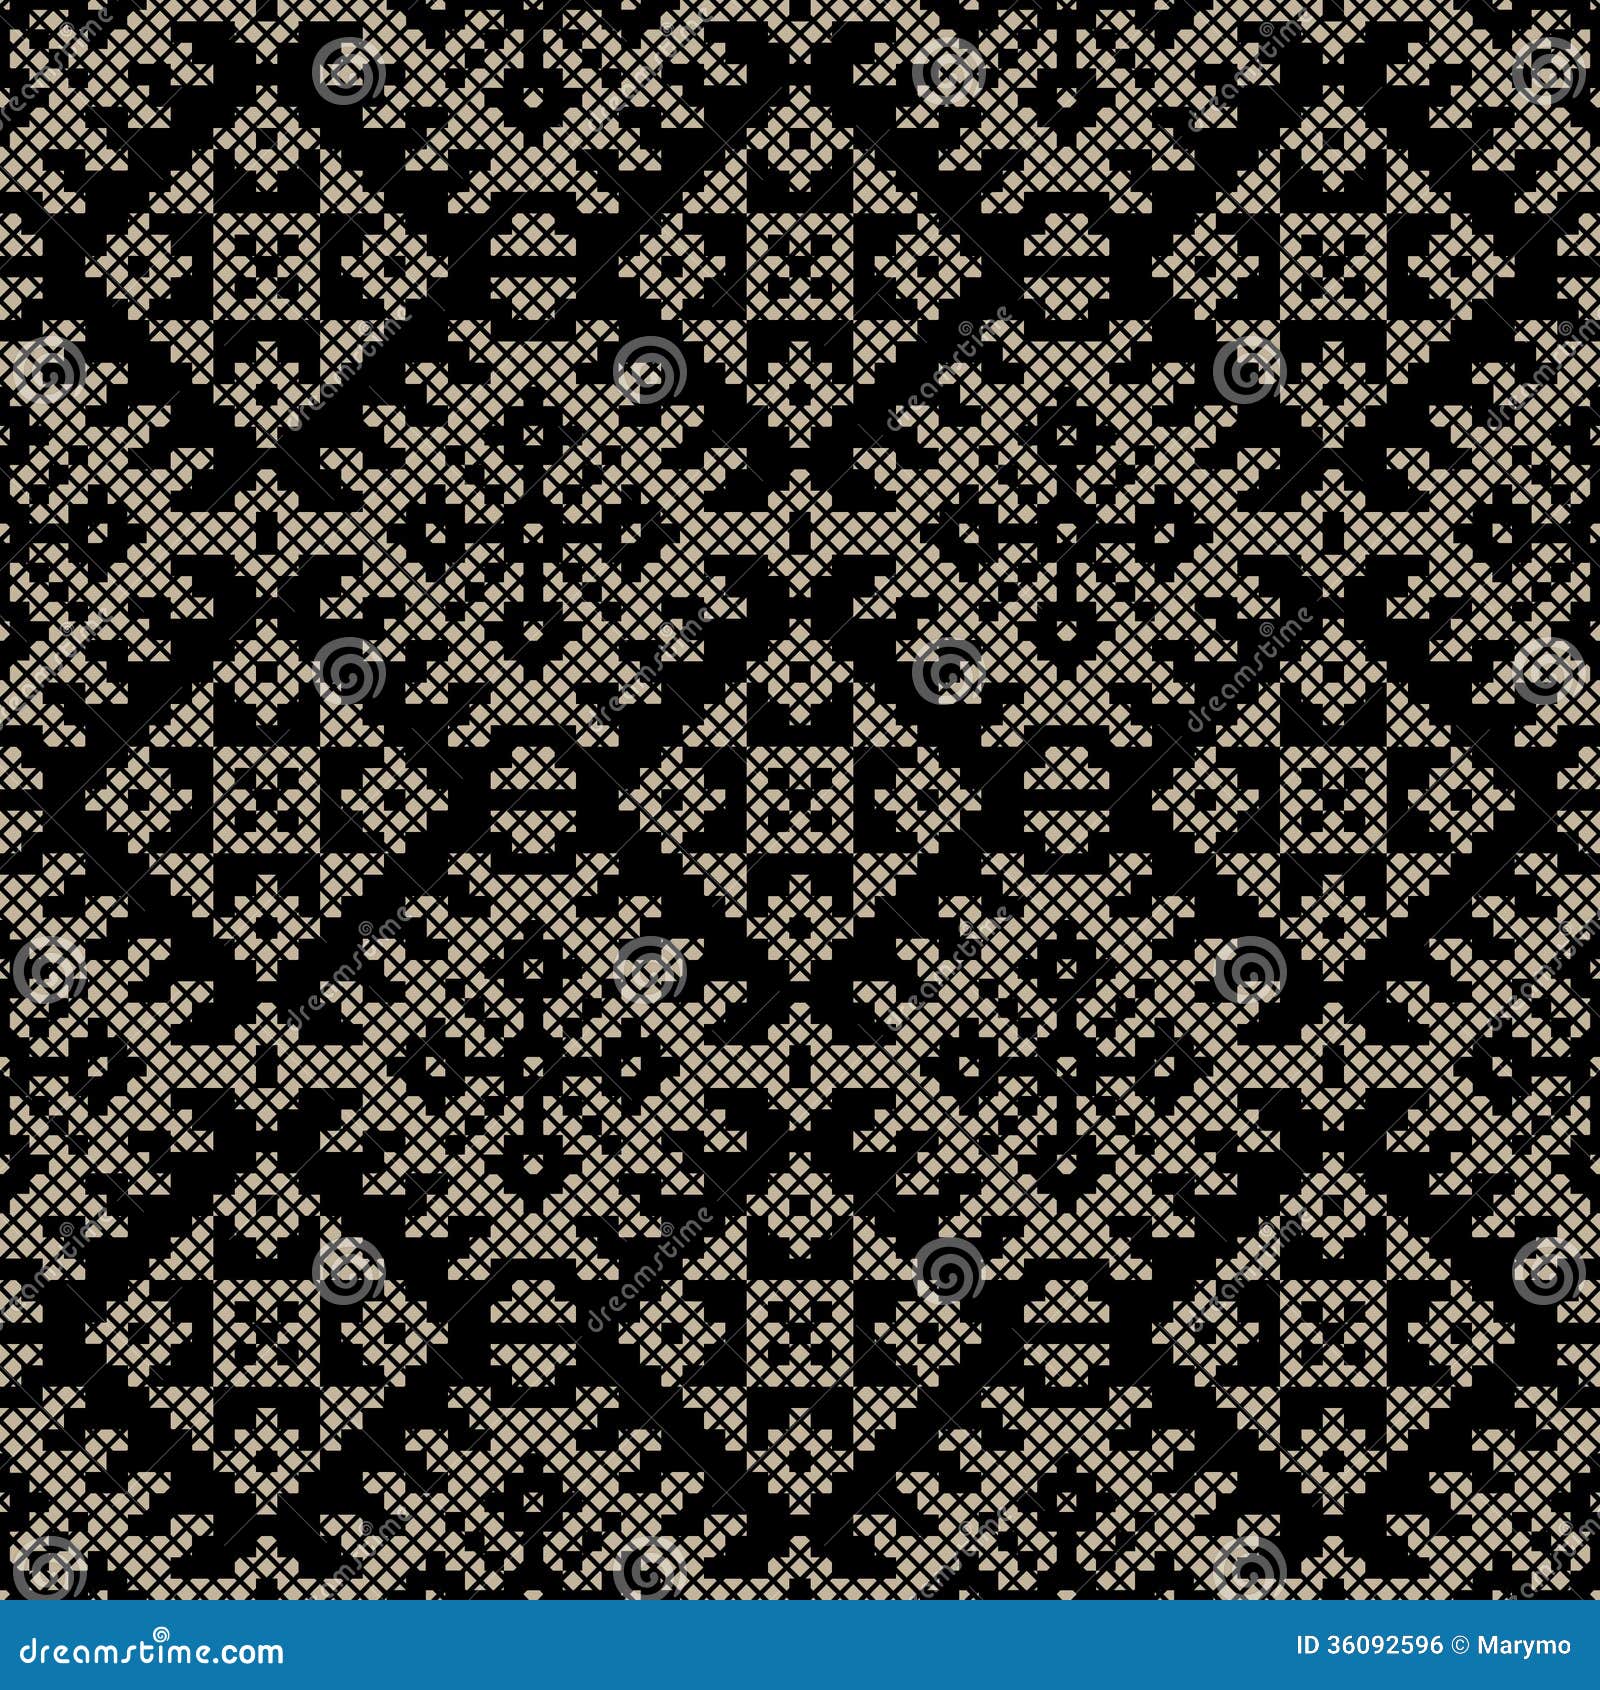 Black Lace Damask Pattern Royalty Free Stock Image - Image: 36092596